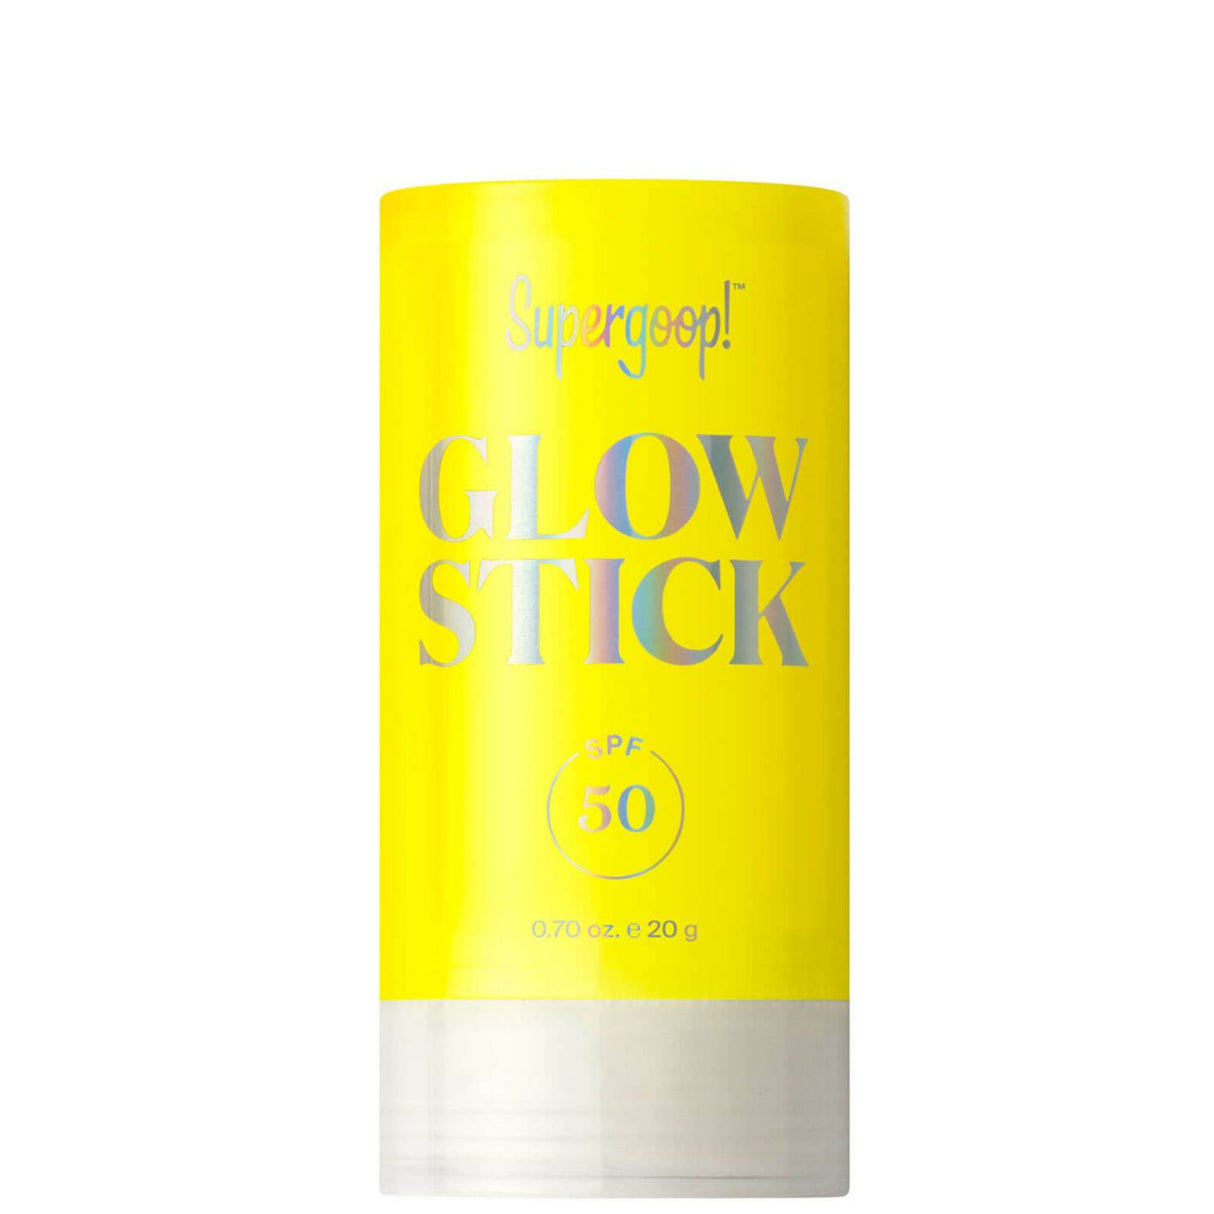 Supergoop!® Glow Stick SPF 50 (0.70 oz.)